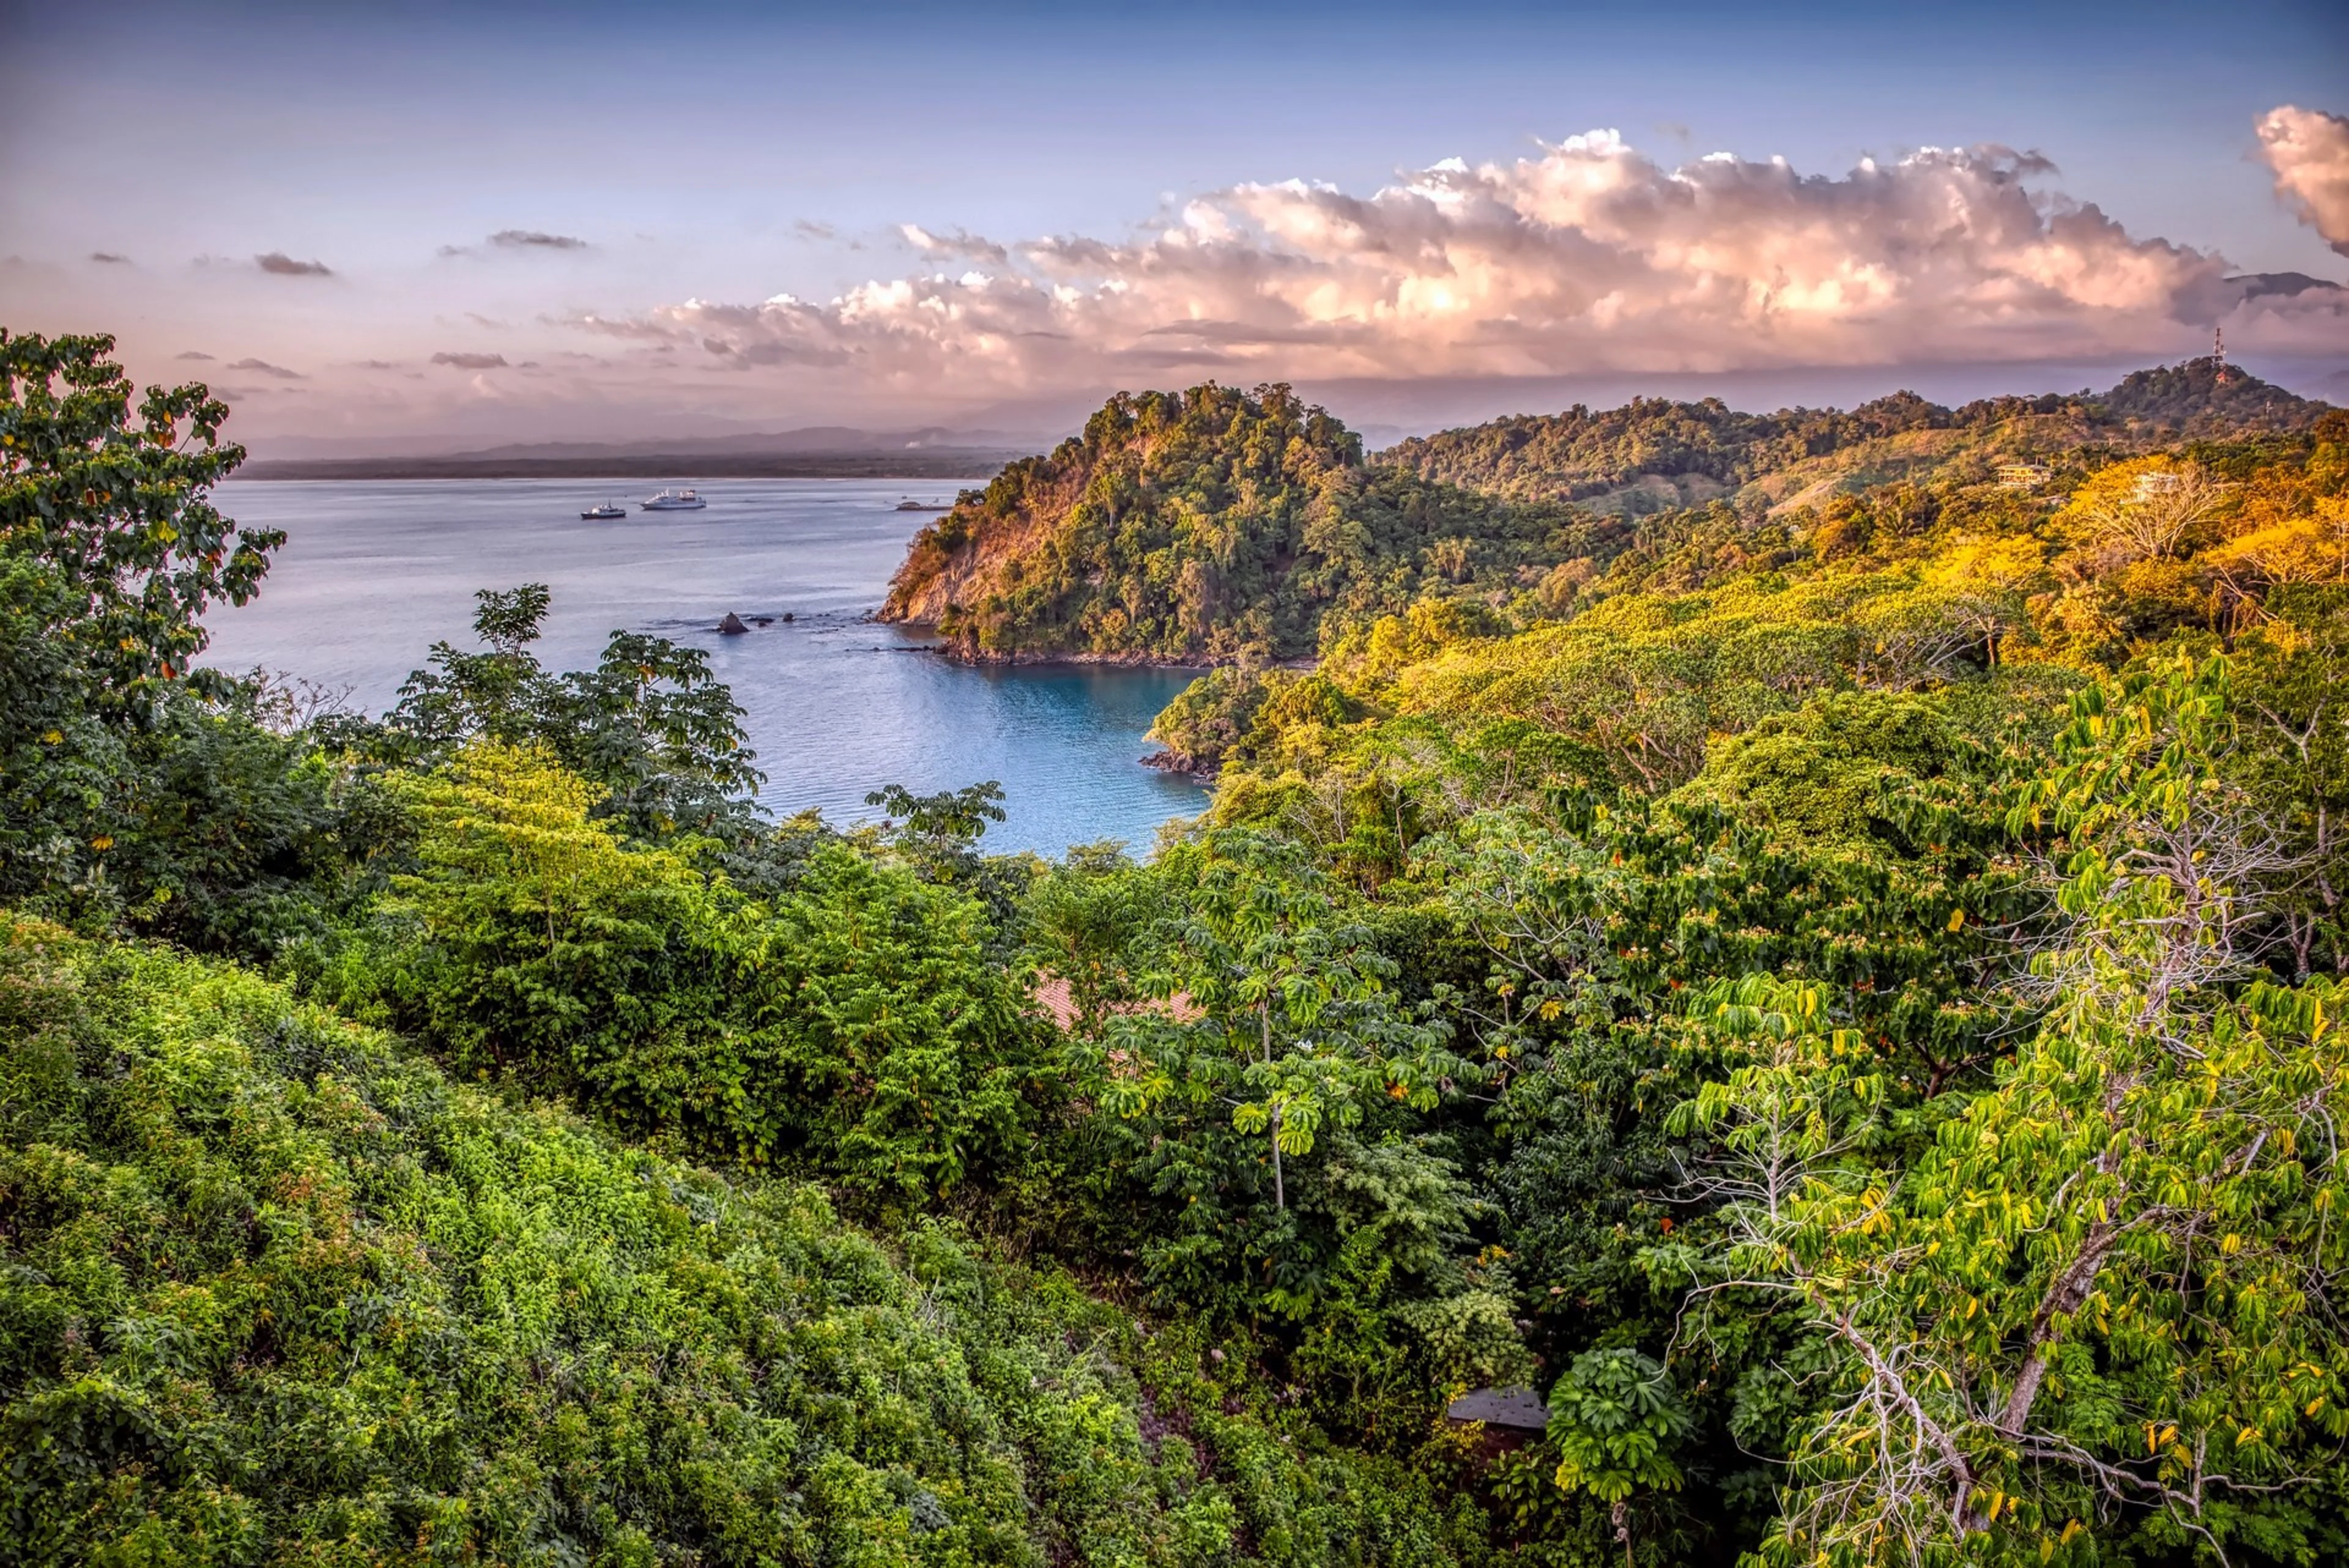 Costa Rica - Photo Credit: Manuel Antonio/Shutterstock